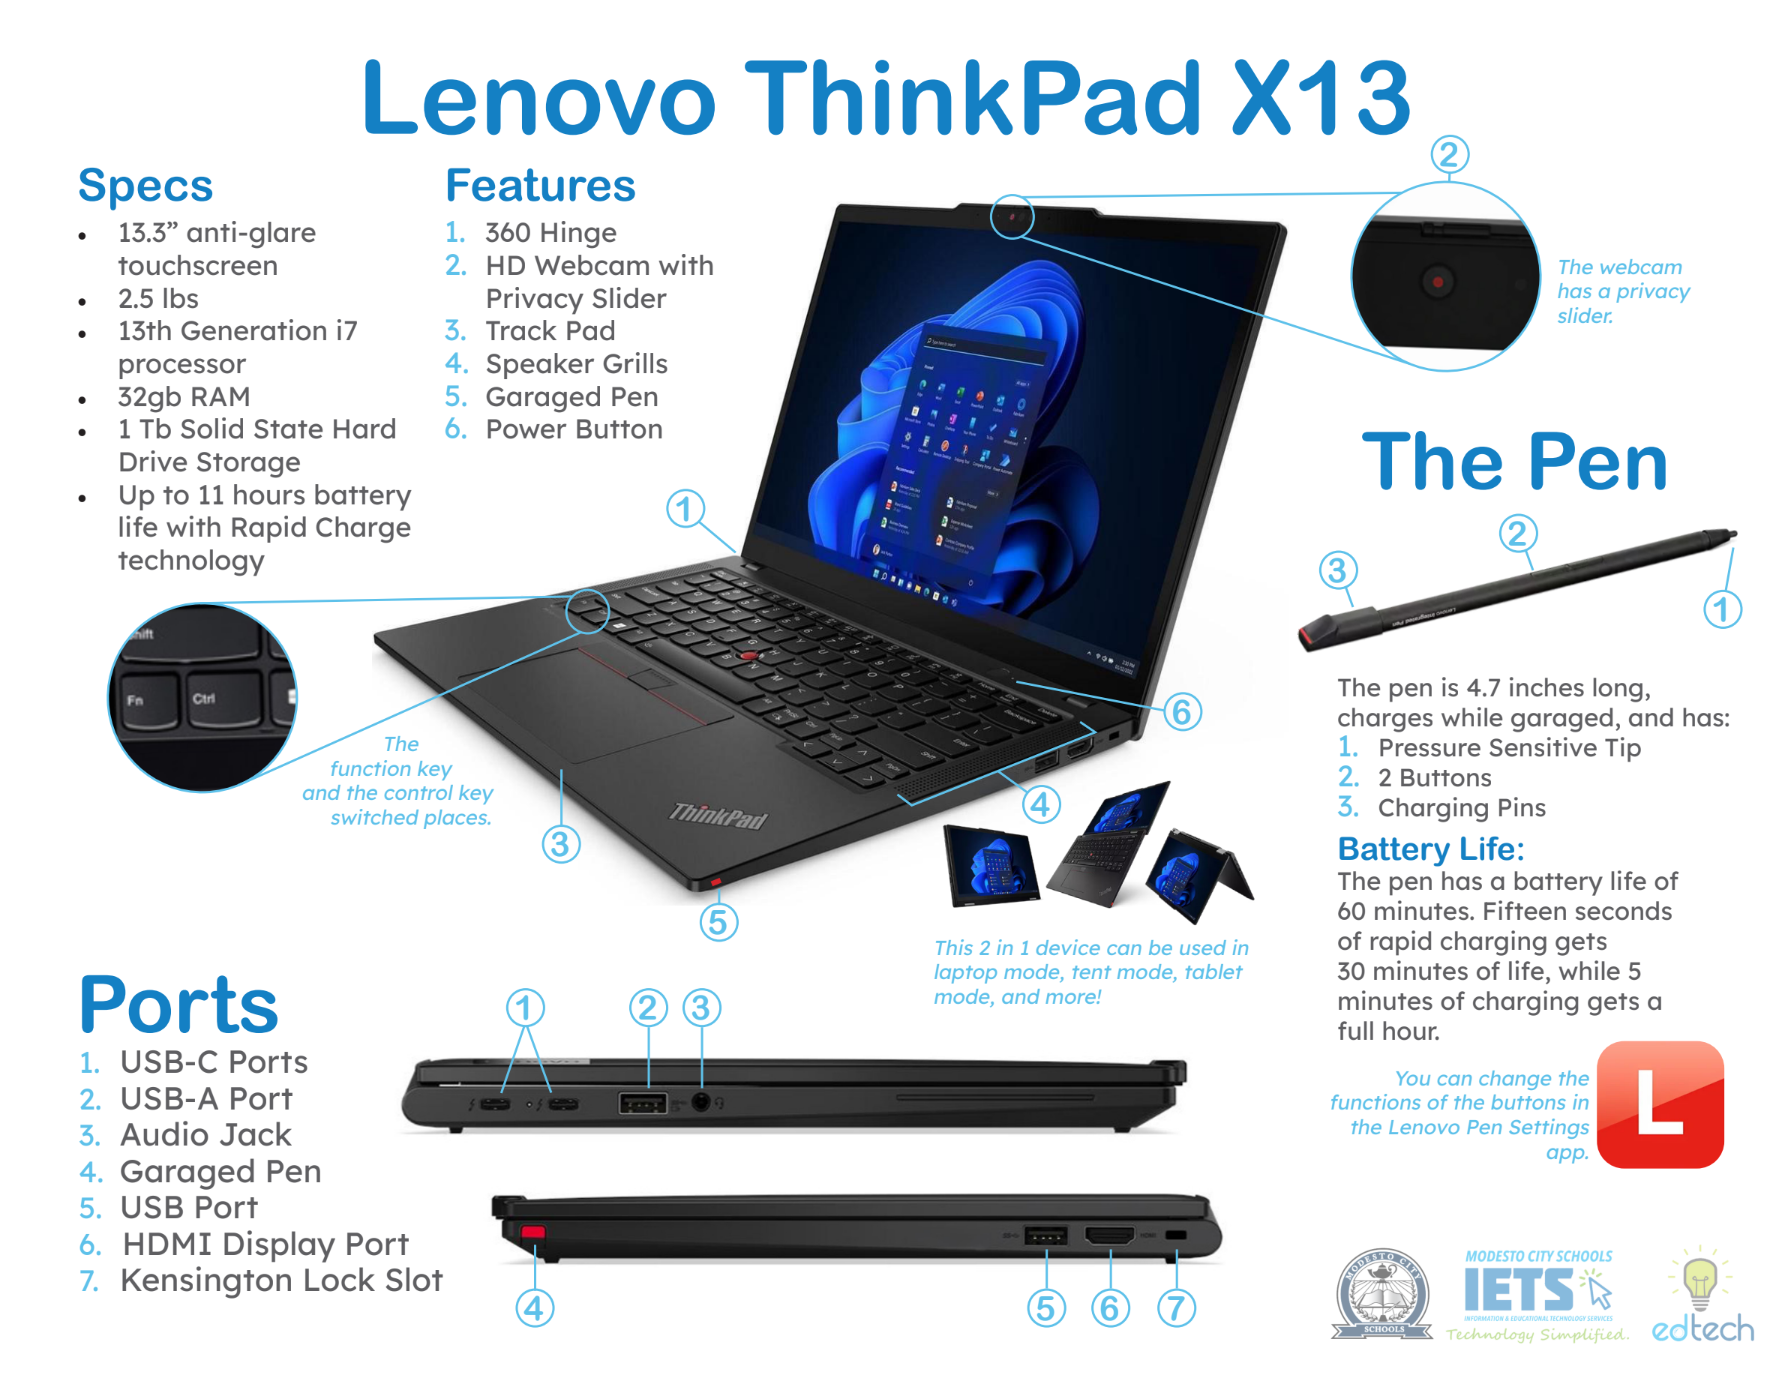 Lenovo ThinkPad X13 Handout Page 1 of 2